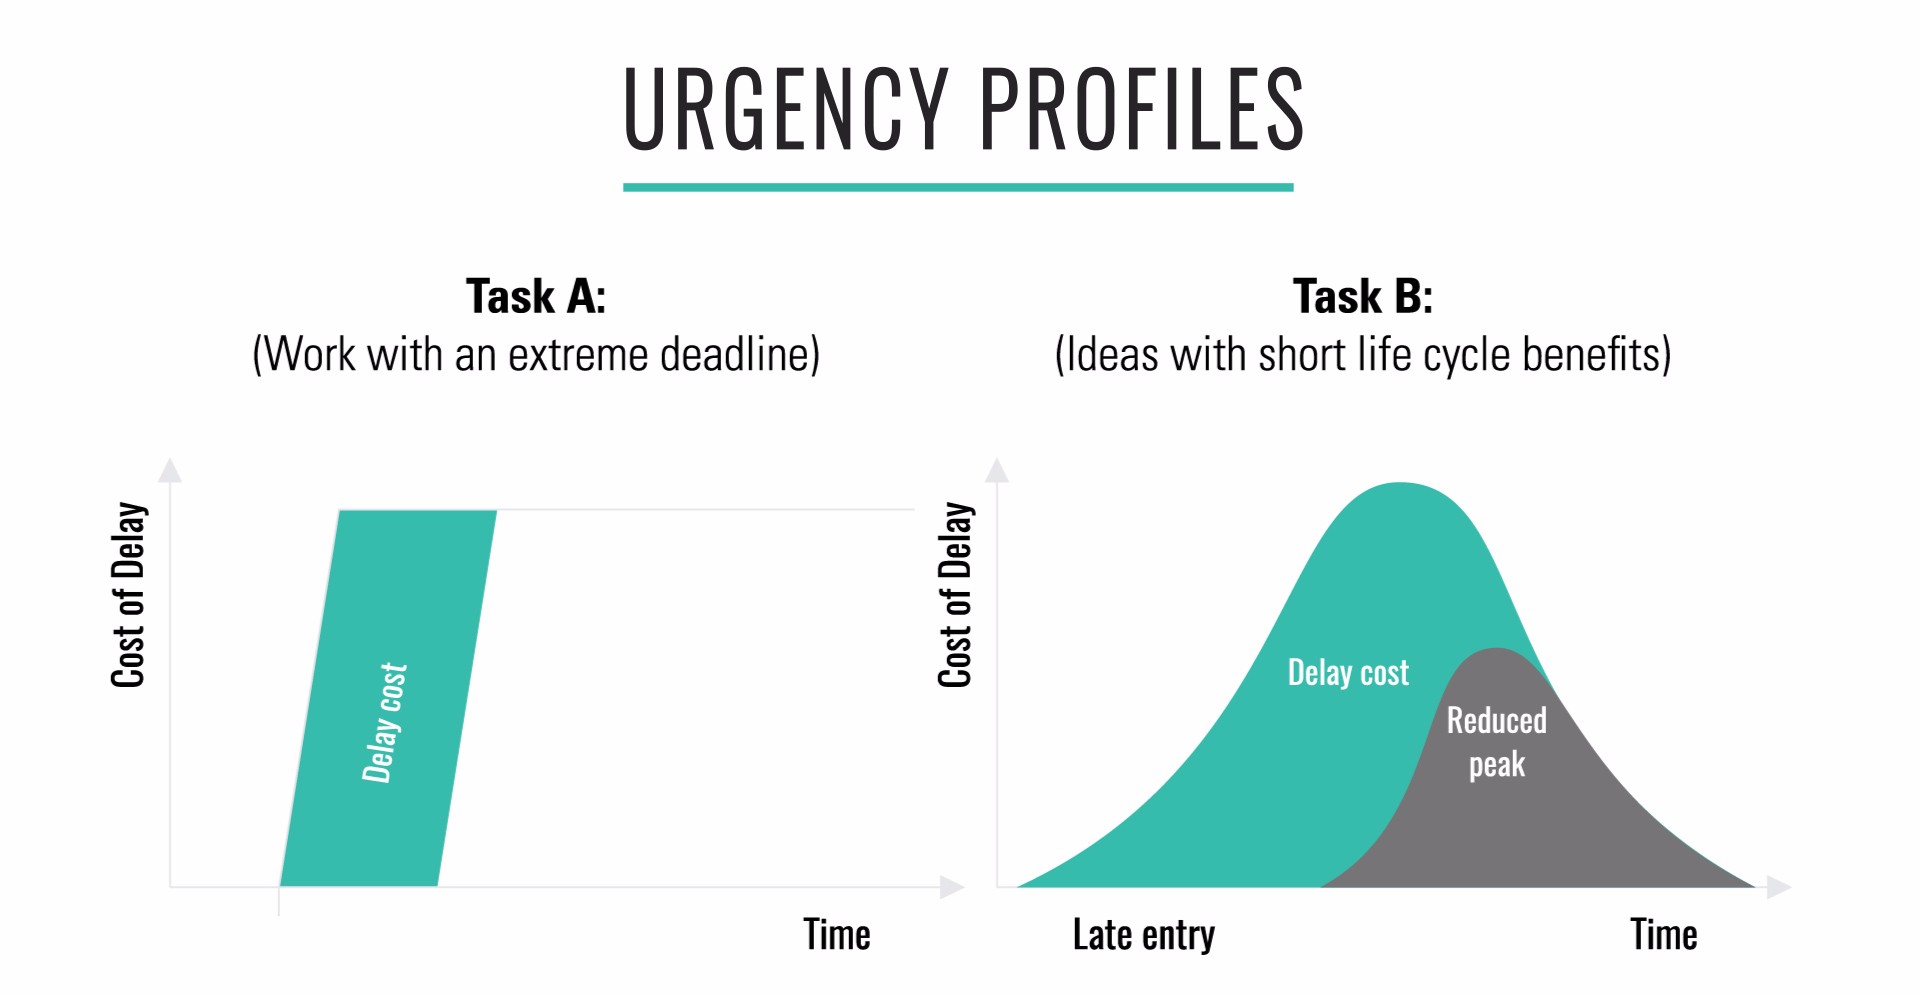 Urgency profiles